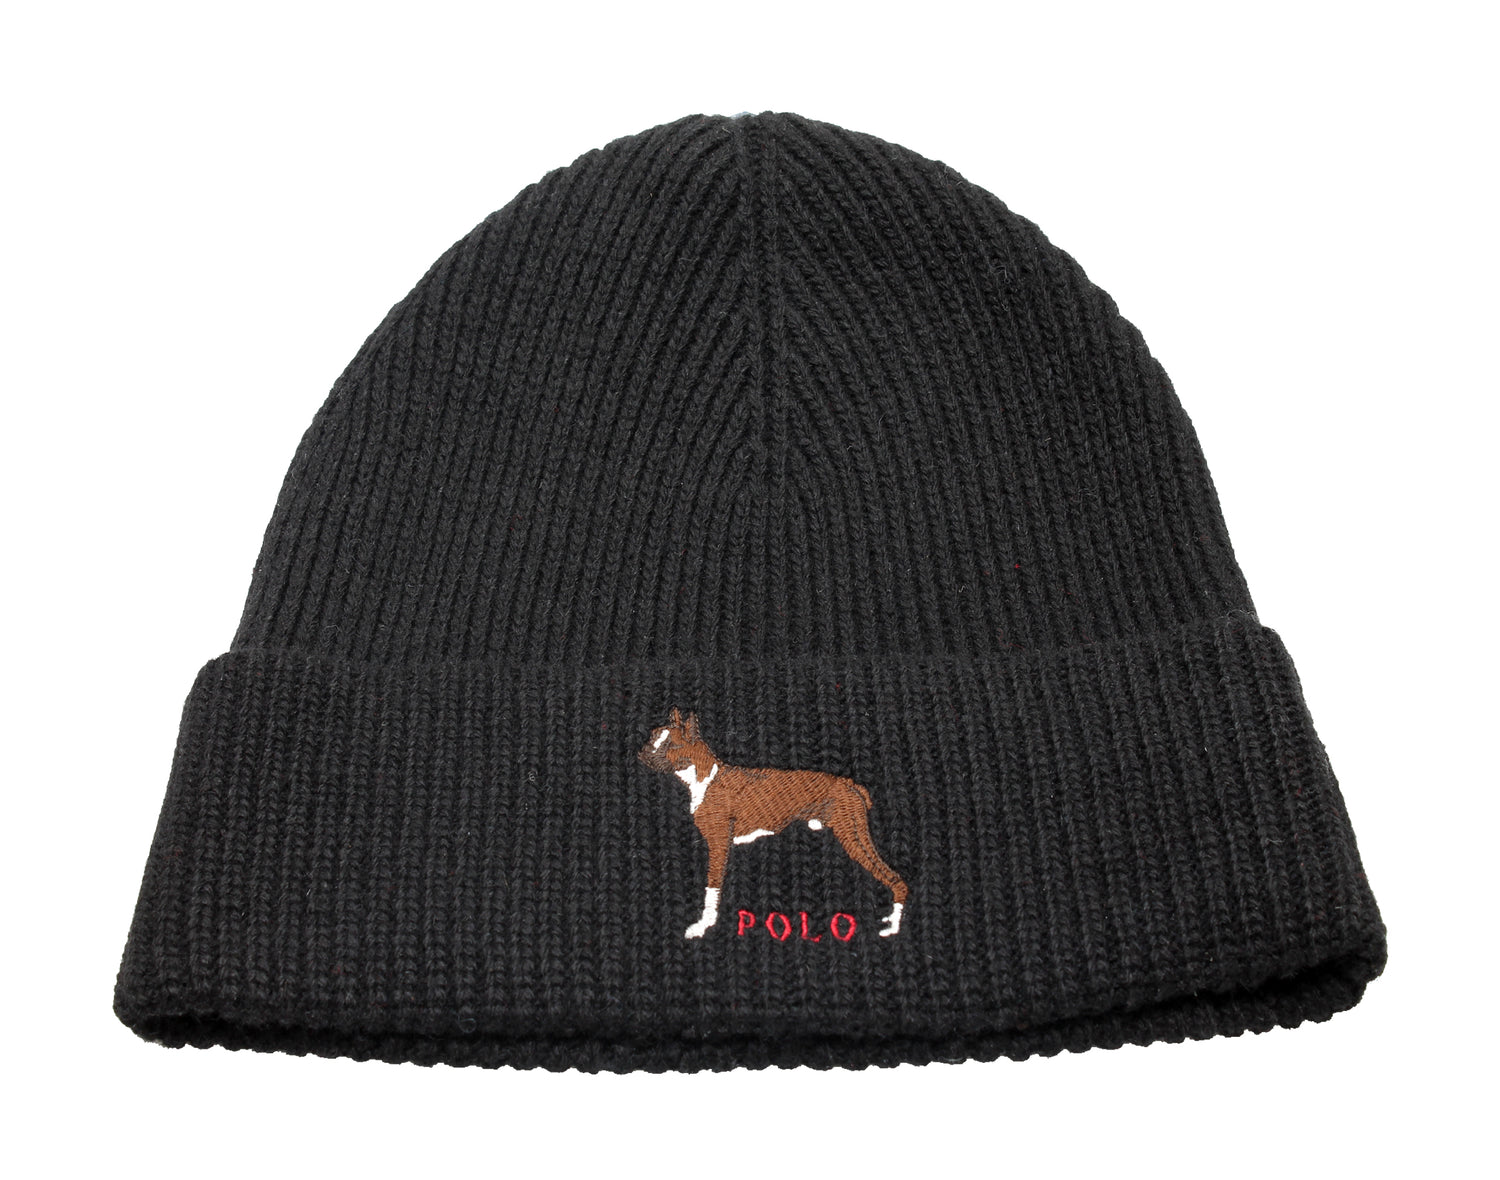 Polo Ralph Lauren Boxer Dog Cuff Knit Hat